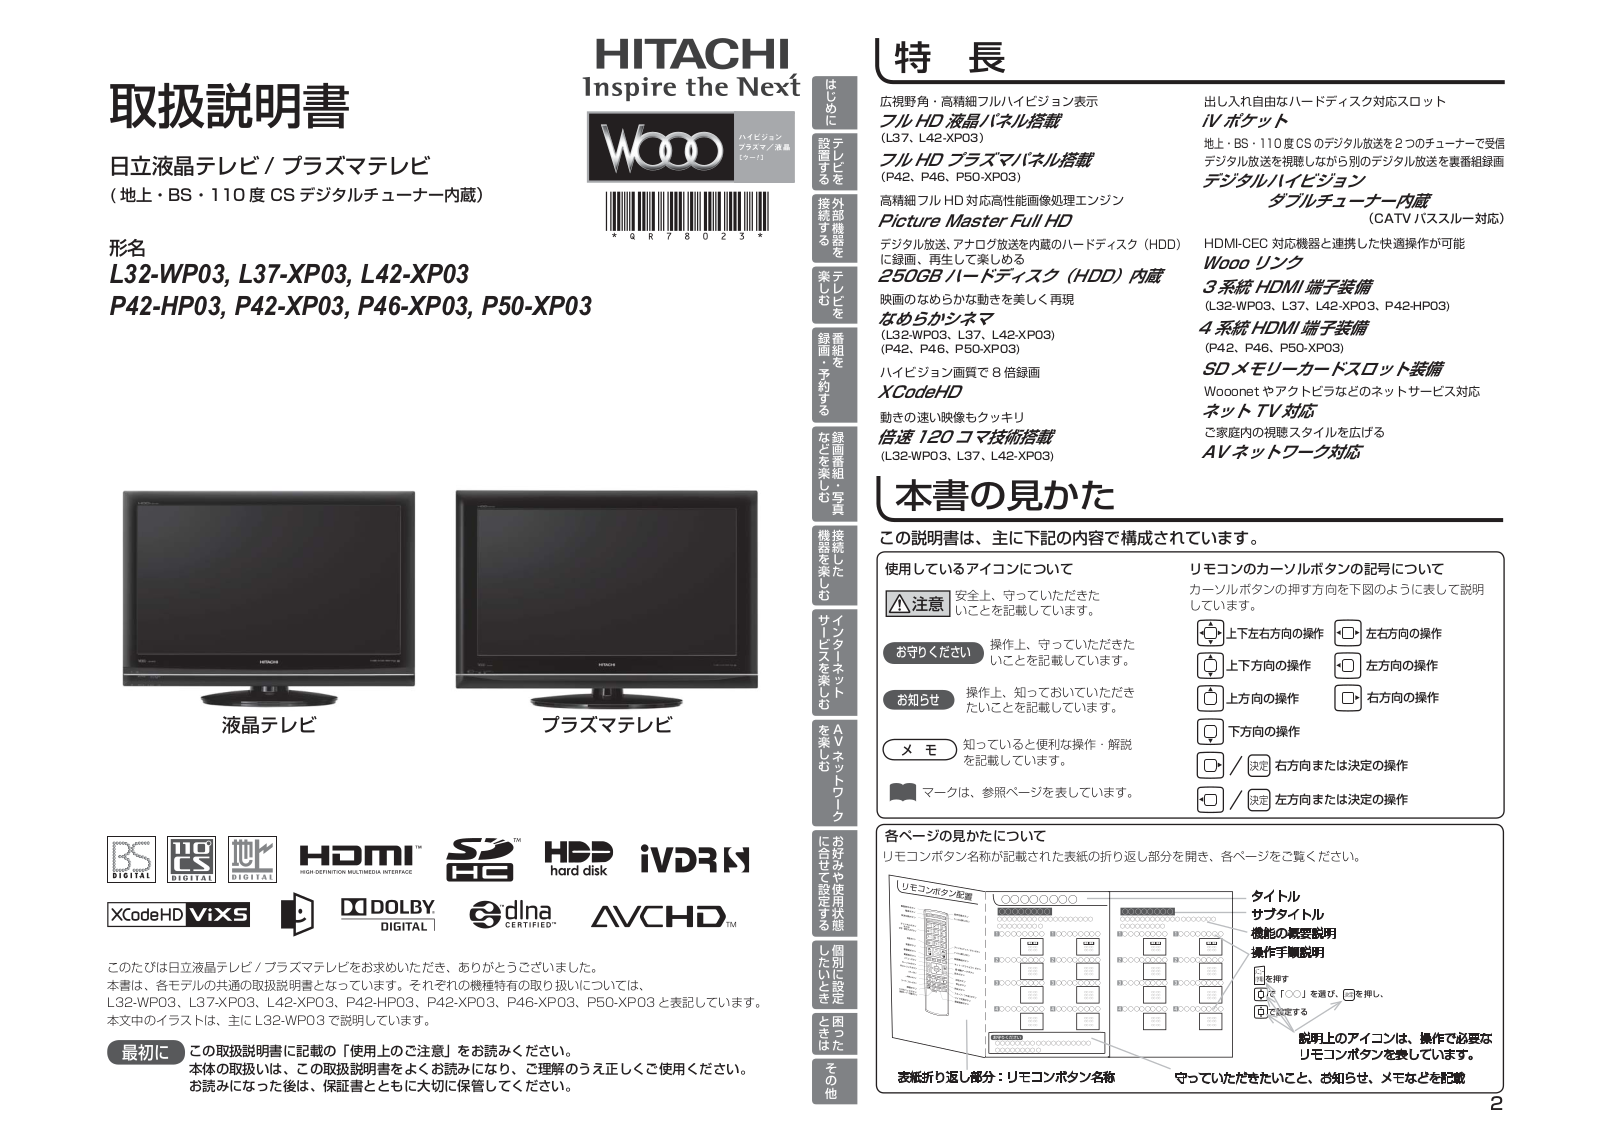 Hitachi L42-XP03, L37-XP03, P50-XP03, P46-XP03, L32-WP03 Manual